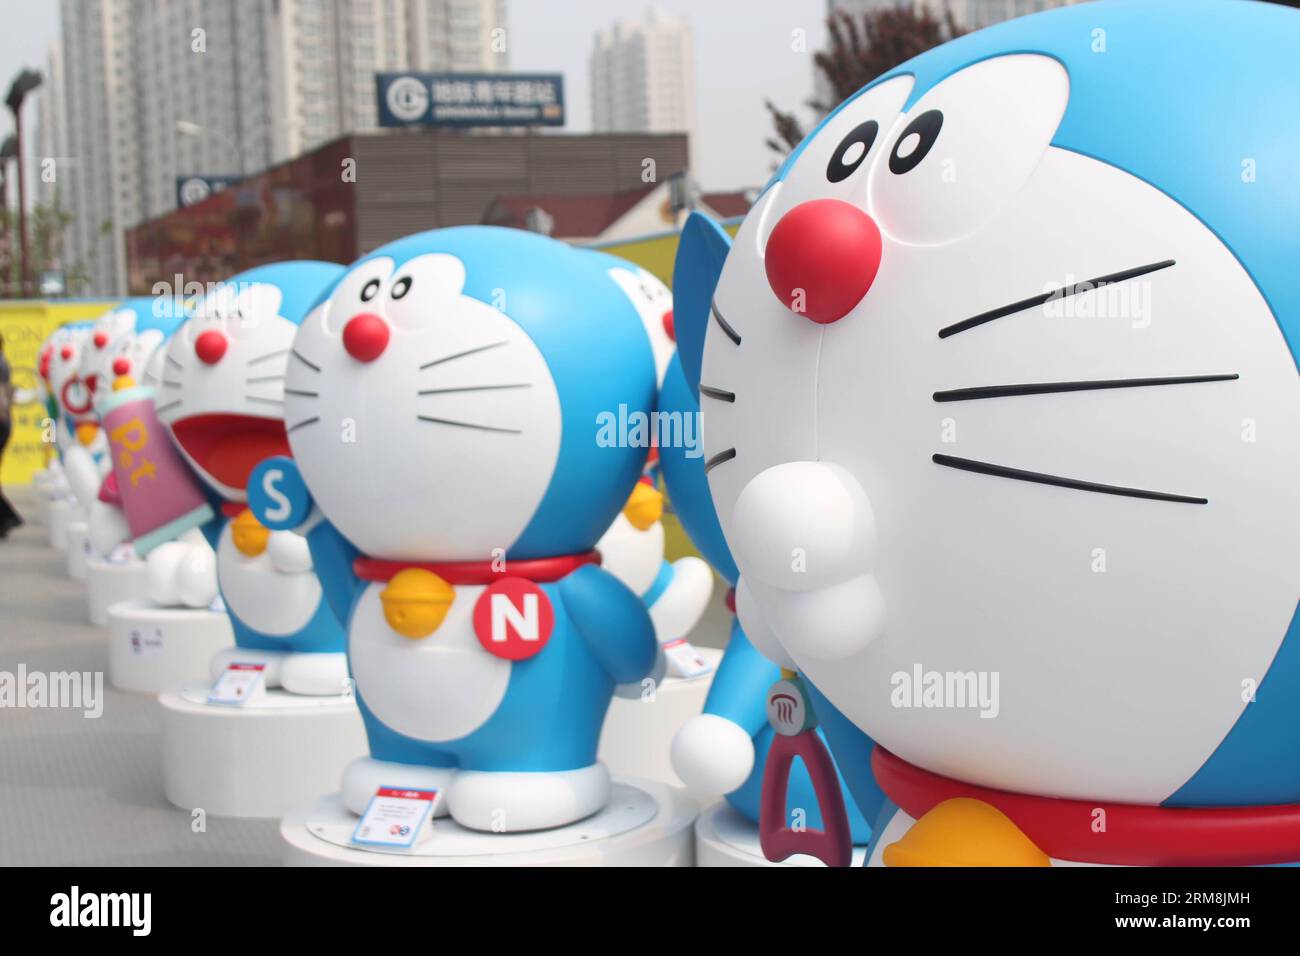 Doraemon India - #FridayFacts #Doraemon #Gadgets Gadget: SPACE